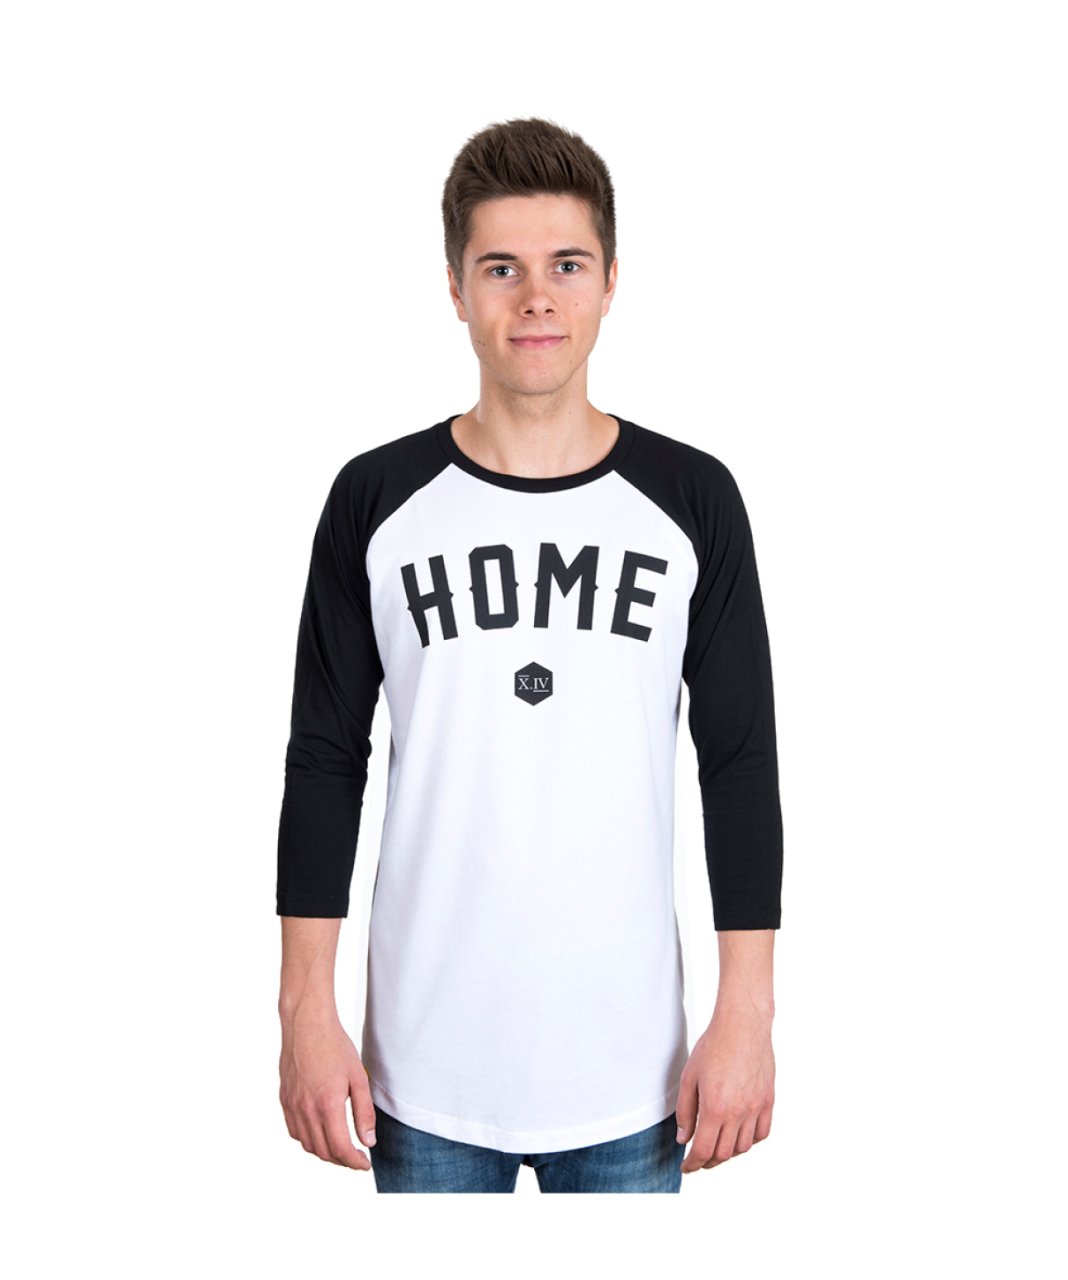 Home Baseball Shirt